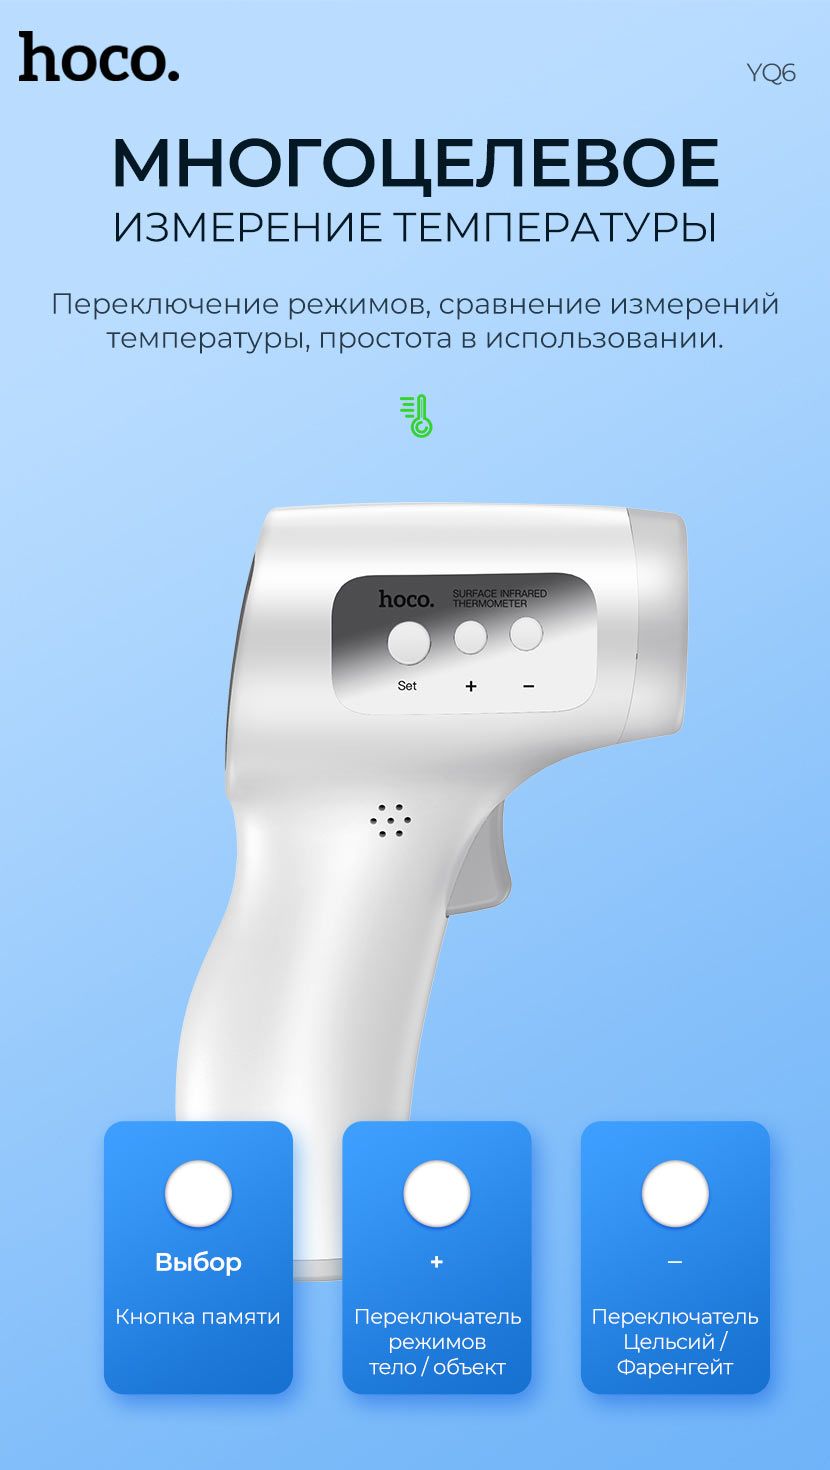 hoco-news-yq6-infrared-thermometer-modes-ru.jpg